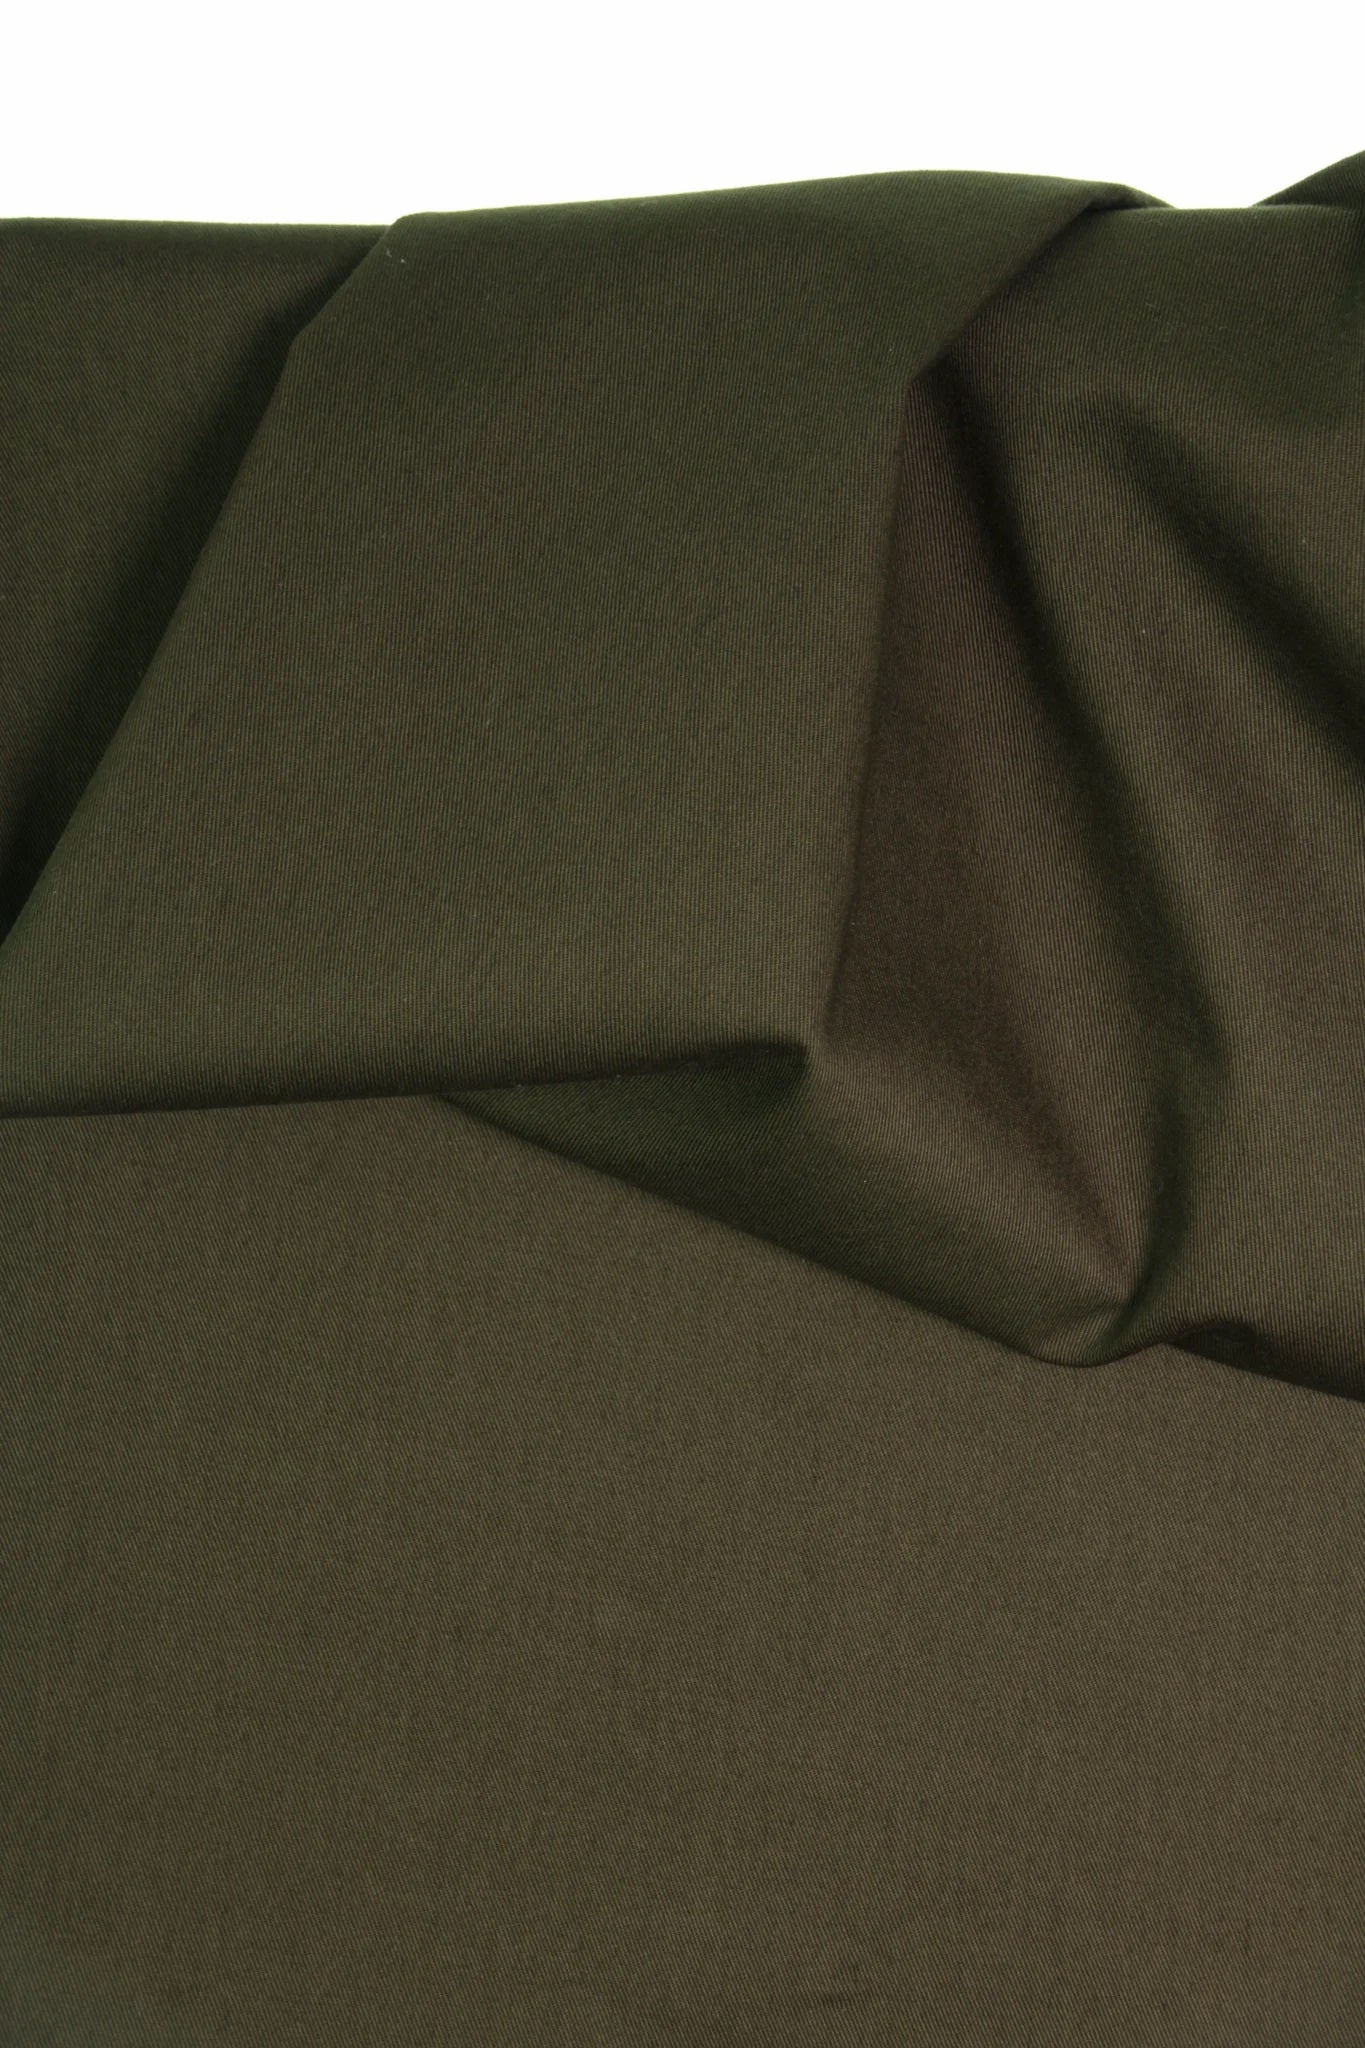 Atelier Jupe bio-cotton in khaki green